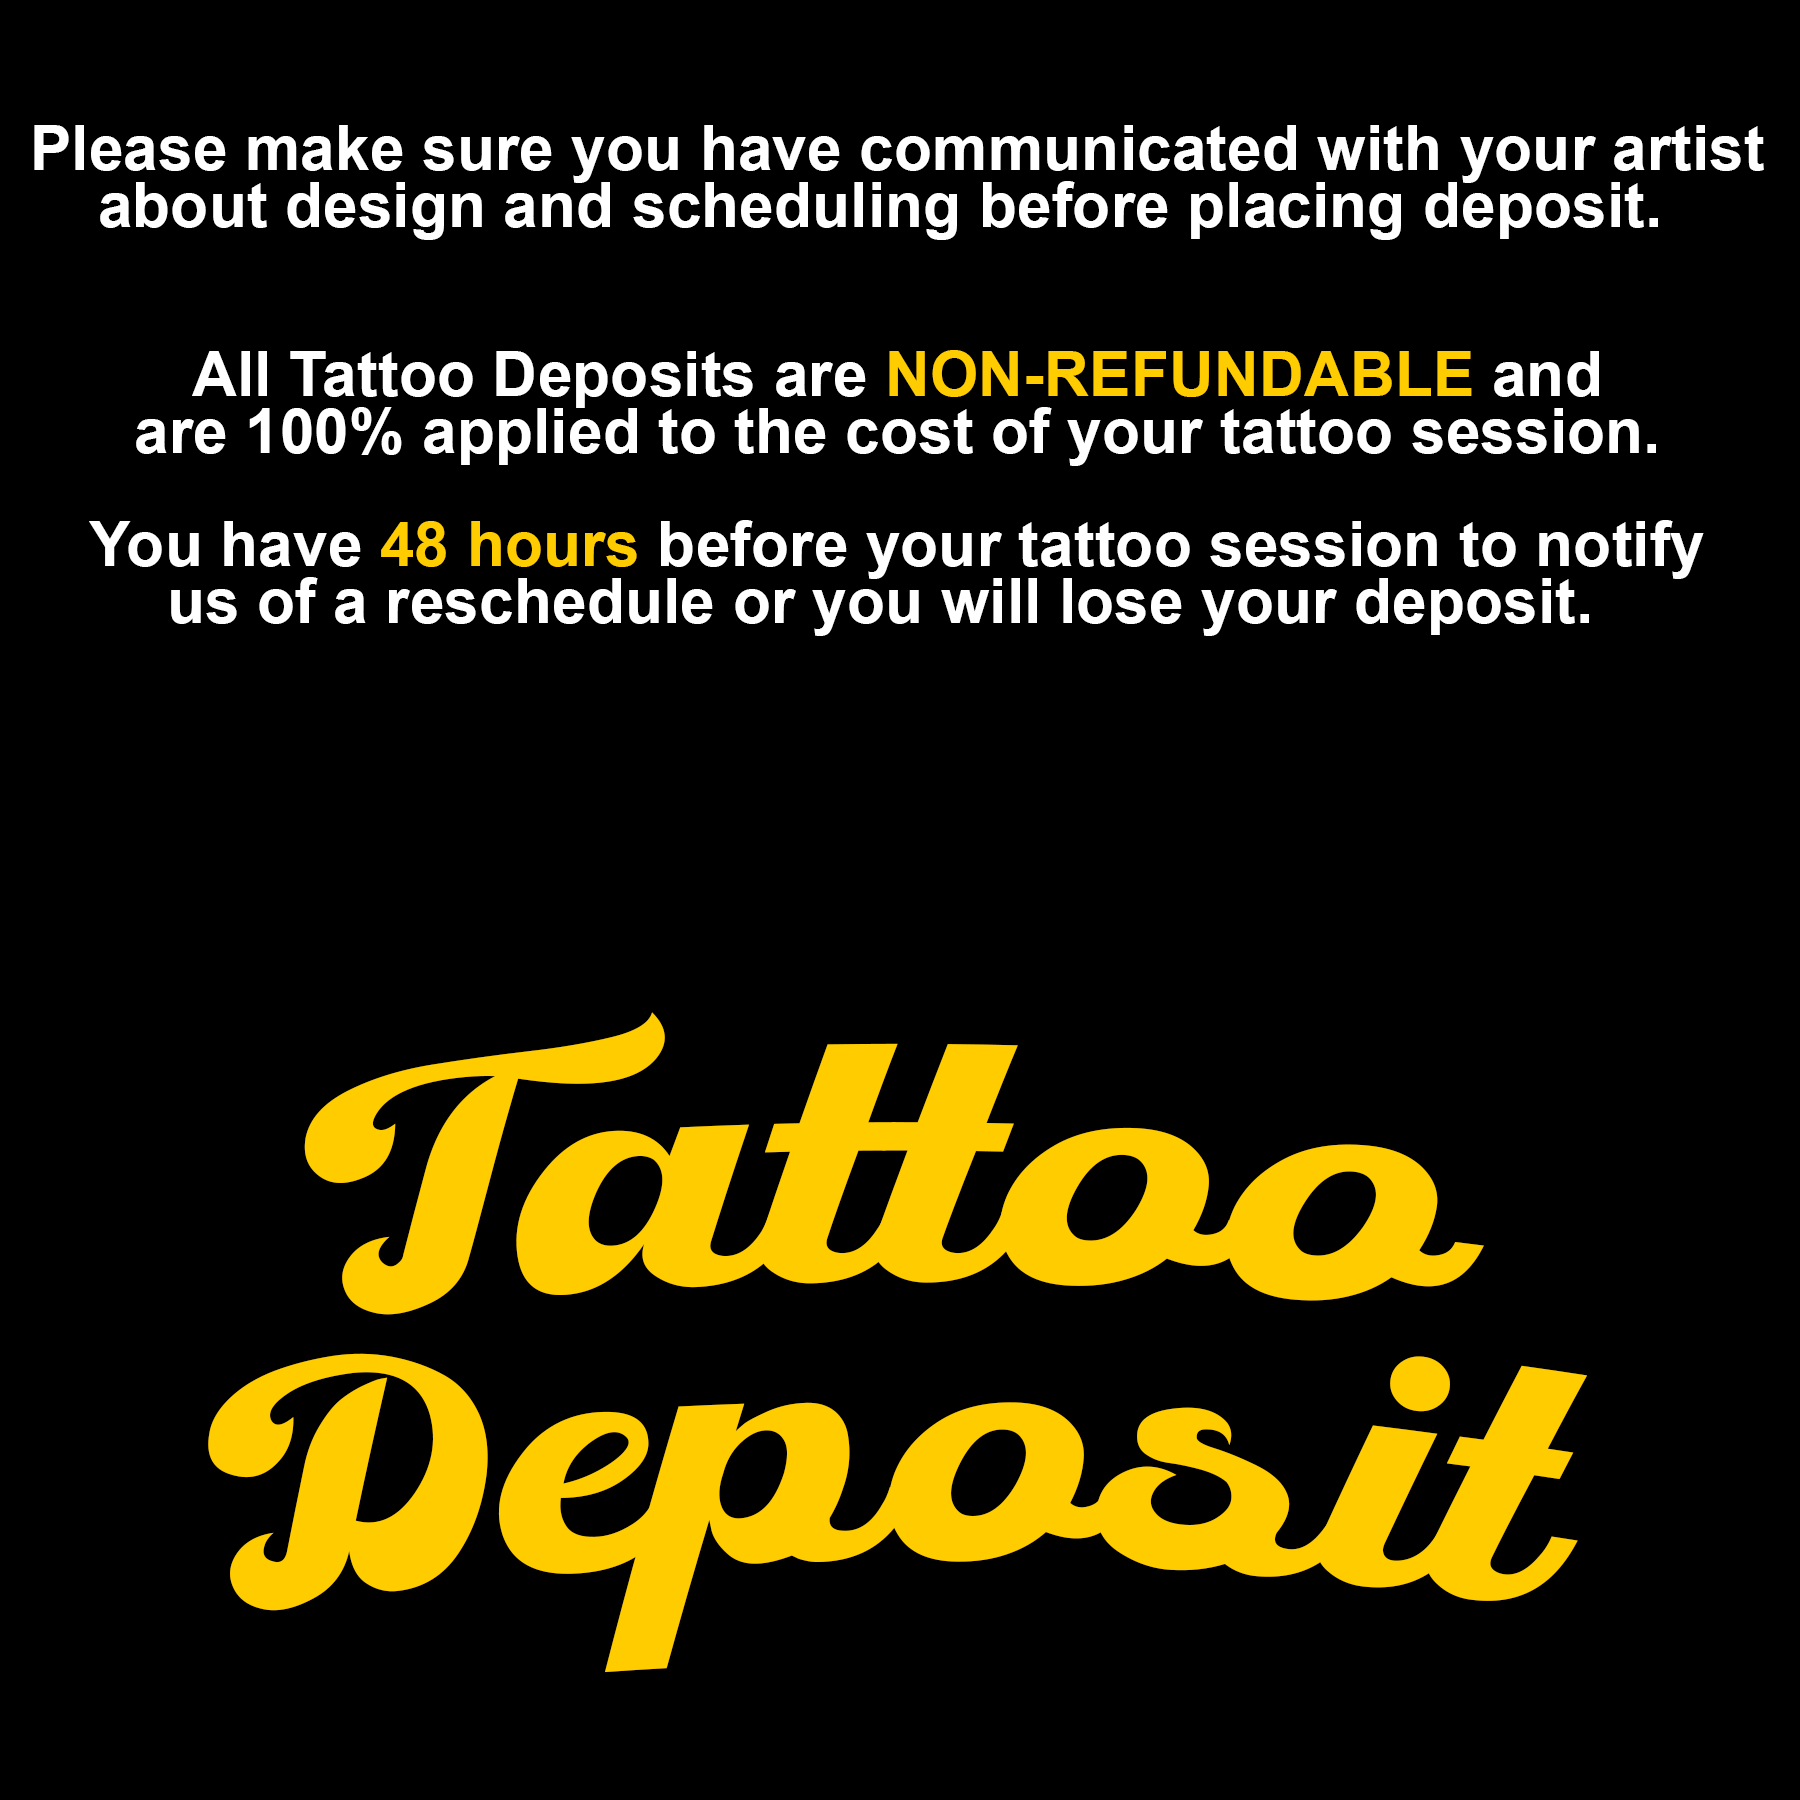 Tommy Tattoo Deposit